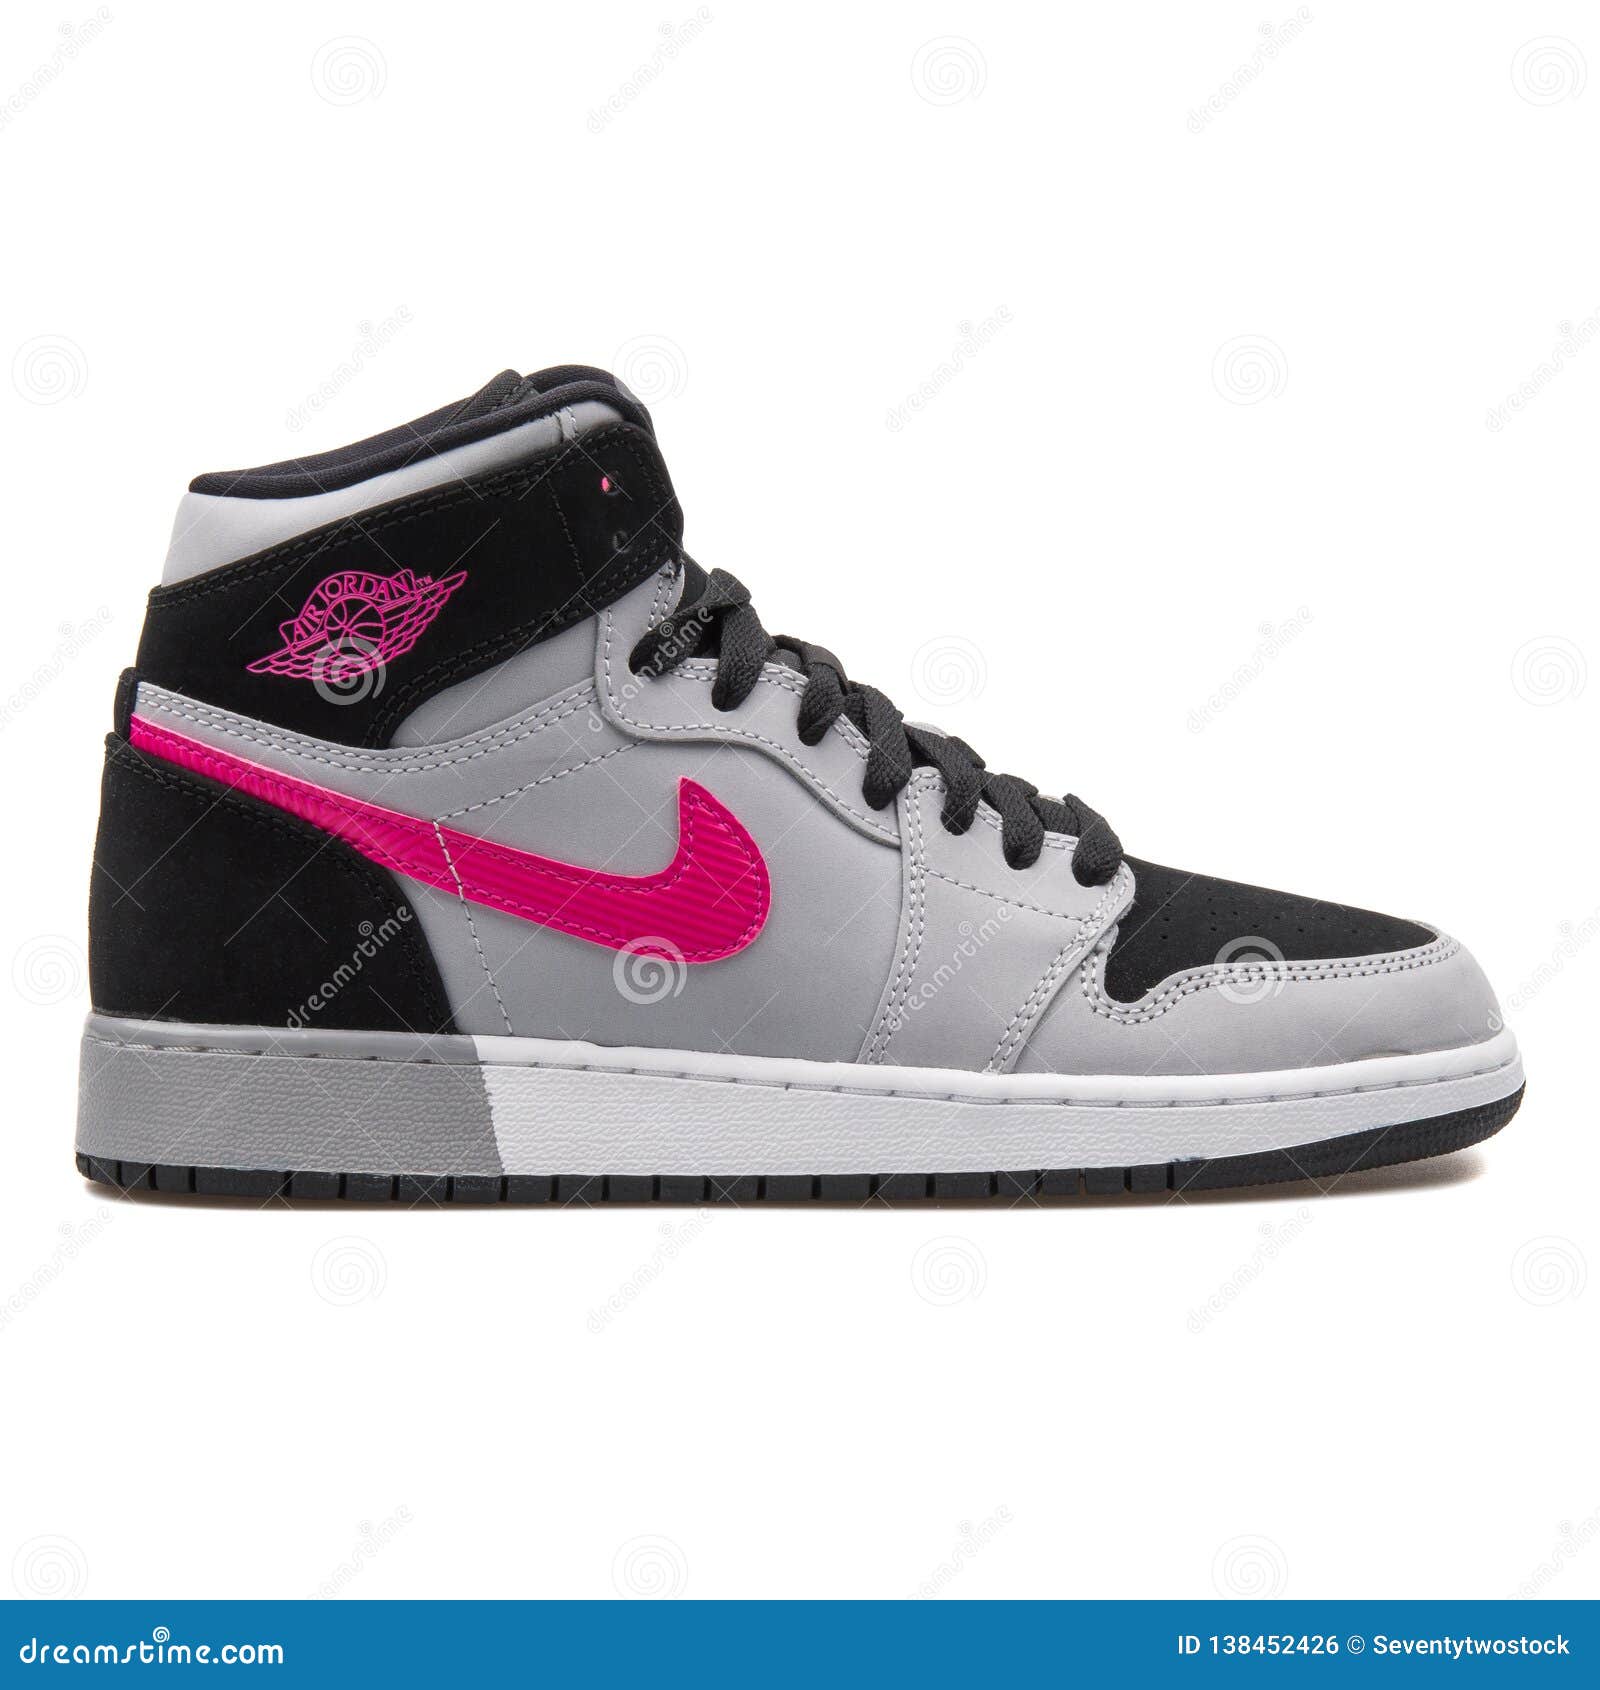 Nike Air Jordan 1 Retro Hoge GG Grijze, Zwarte Roze Redactionele Foto - Image grijs, levensstijl: 138452426